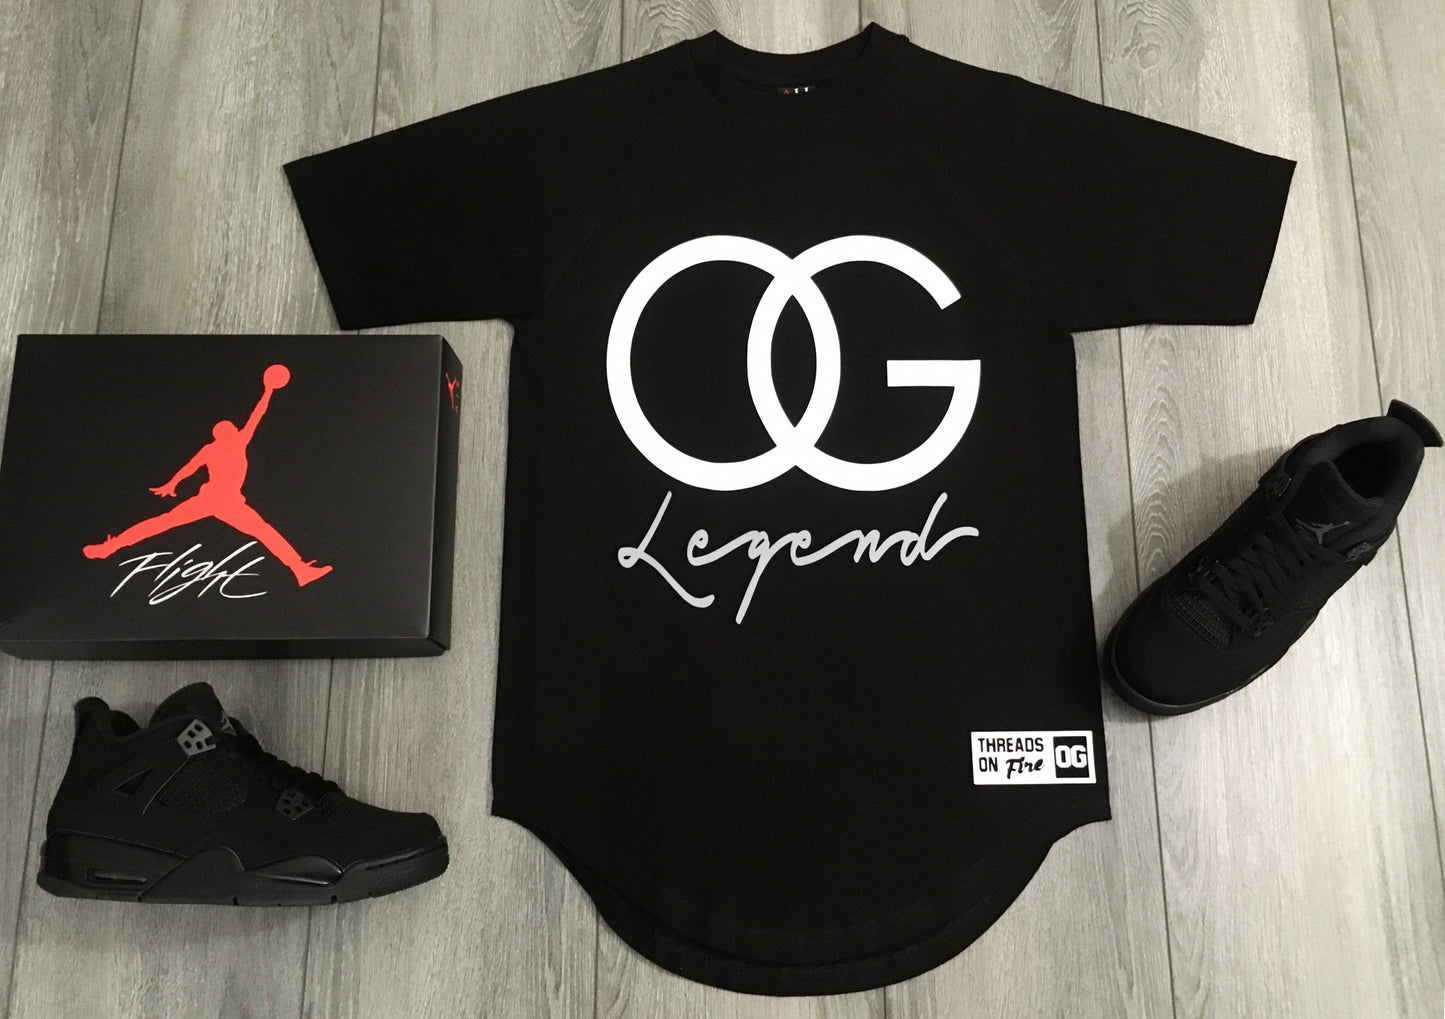 OG Legend Black Drop Tail T-Shirt To Match Black White Air Jordan Sneakers